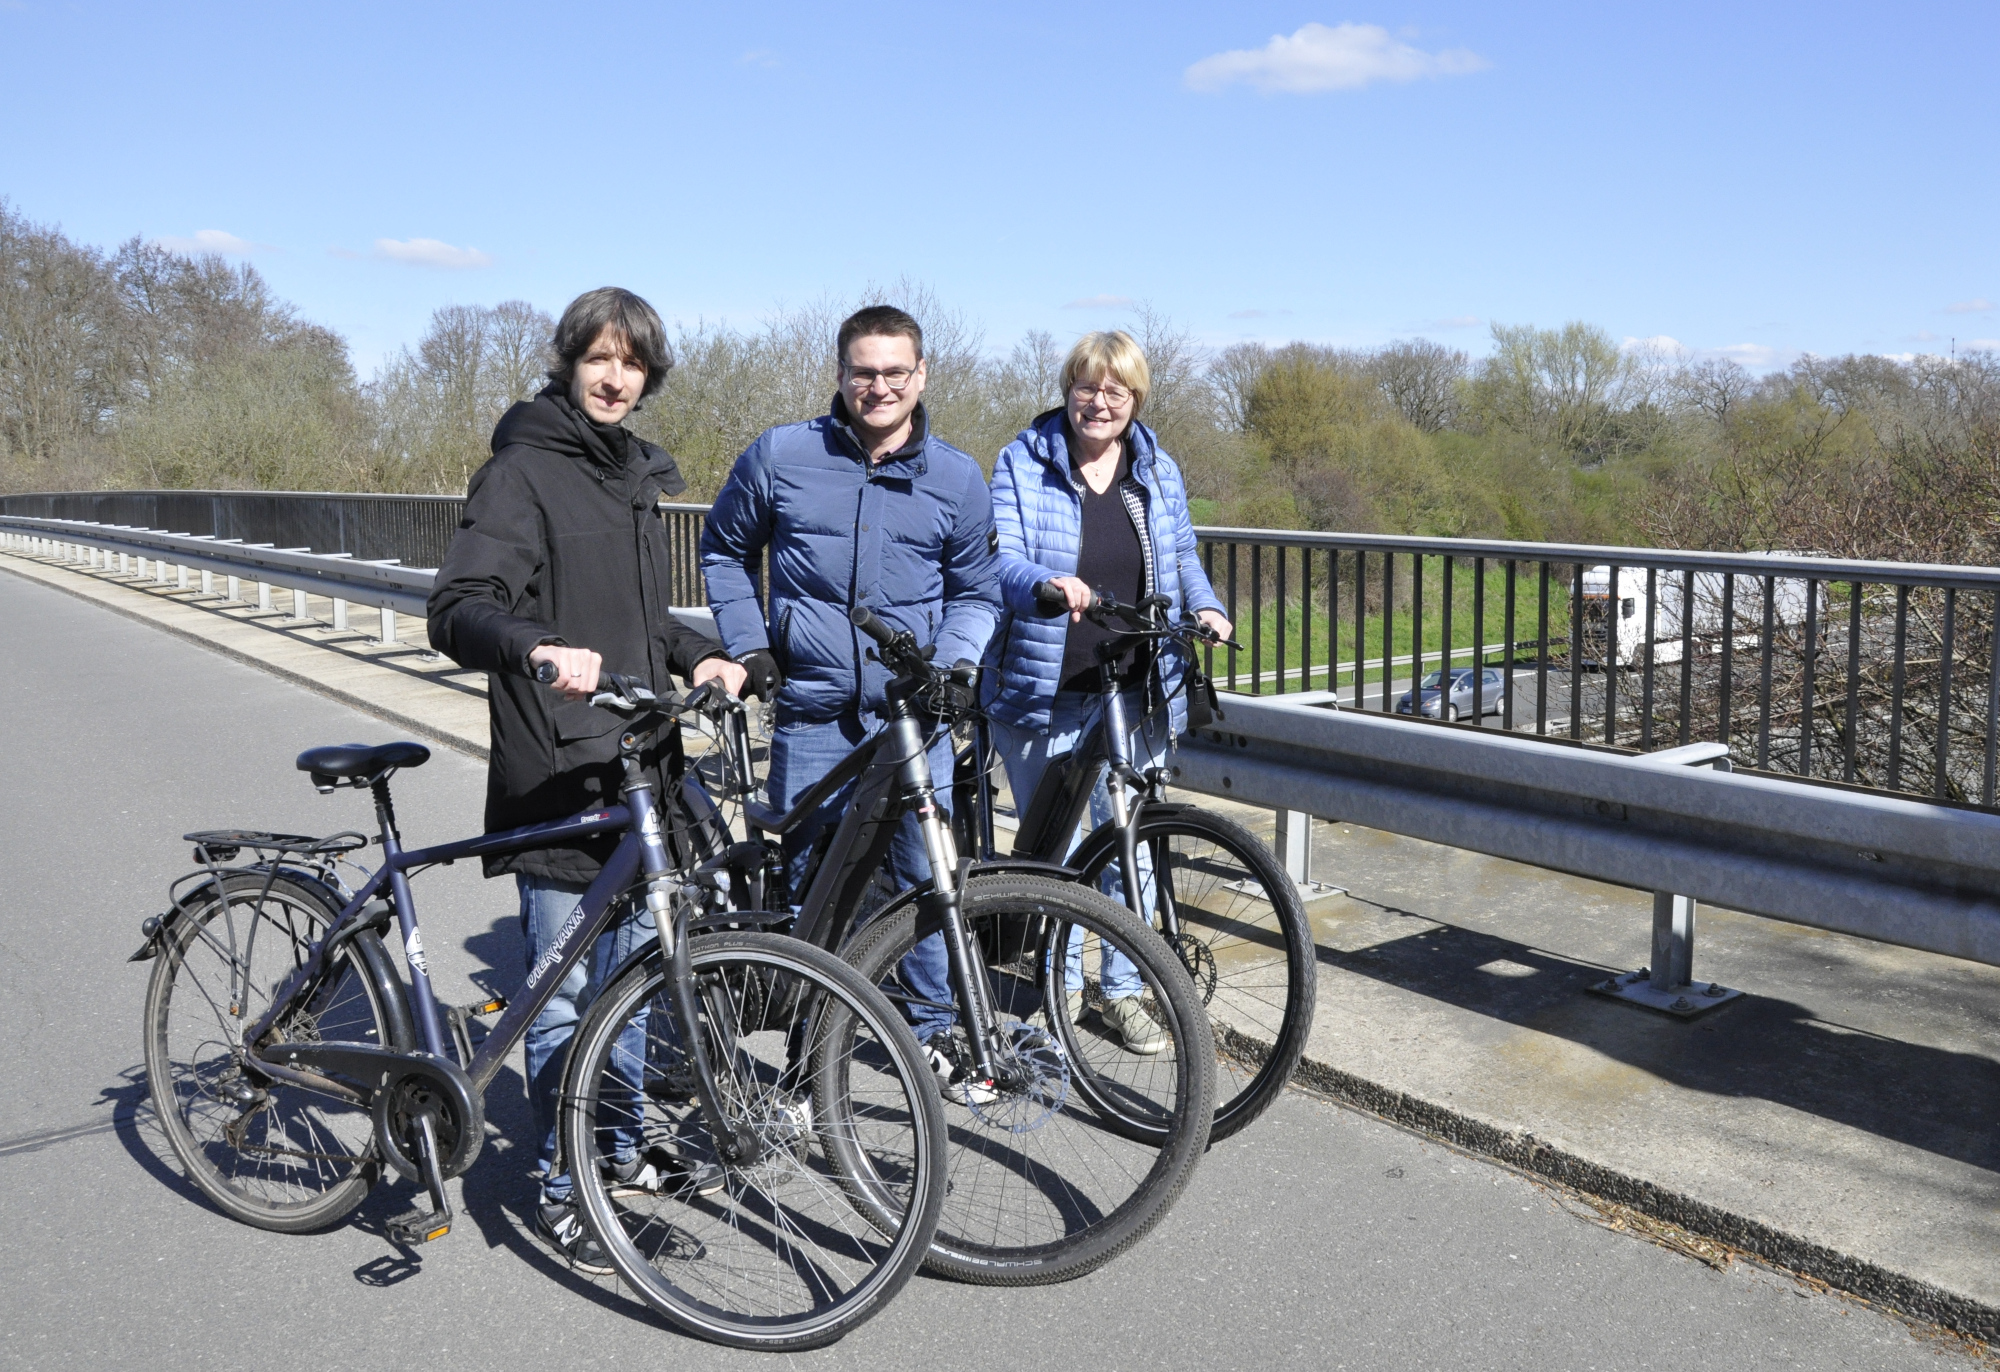 Nils Wittenbrink, Niklas Reimer und Ingrid Hollenhorst (v.l.) auf der Brücke über die A2.